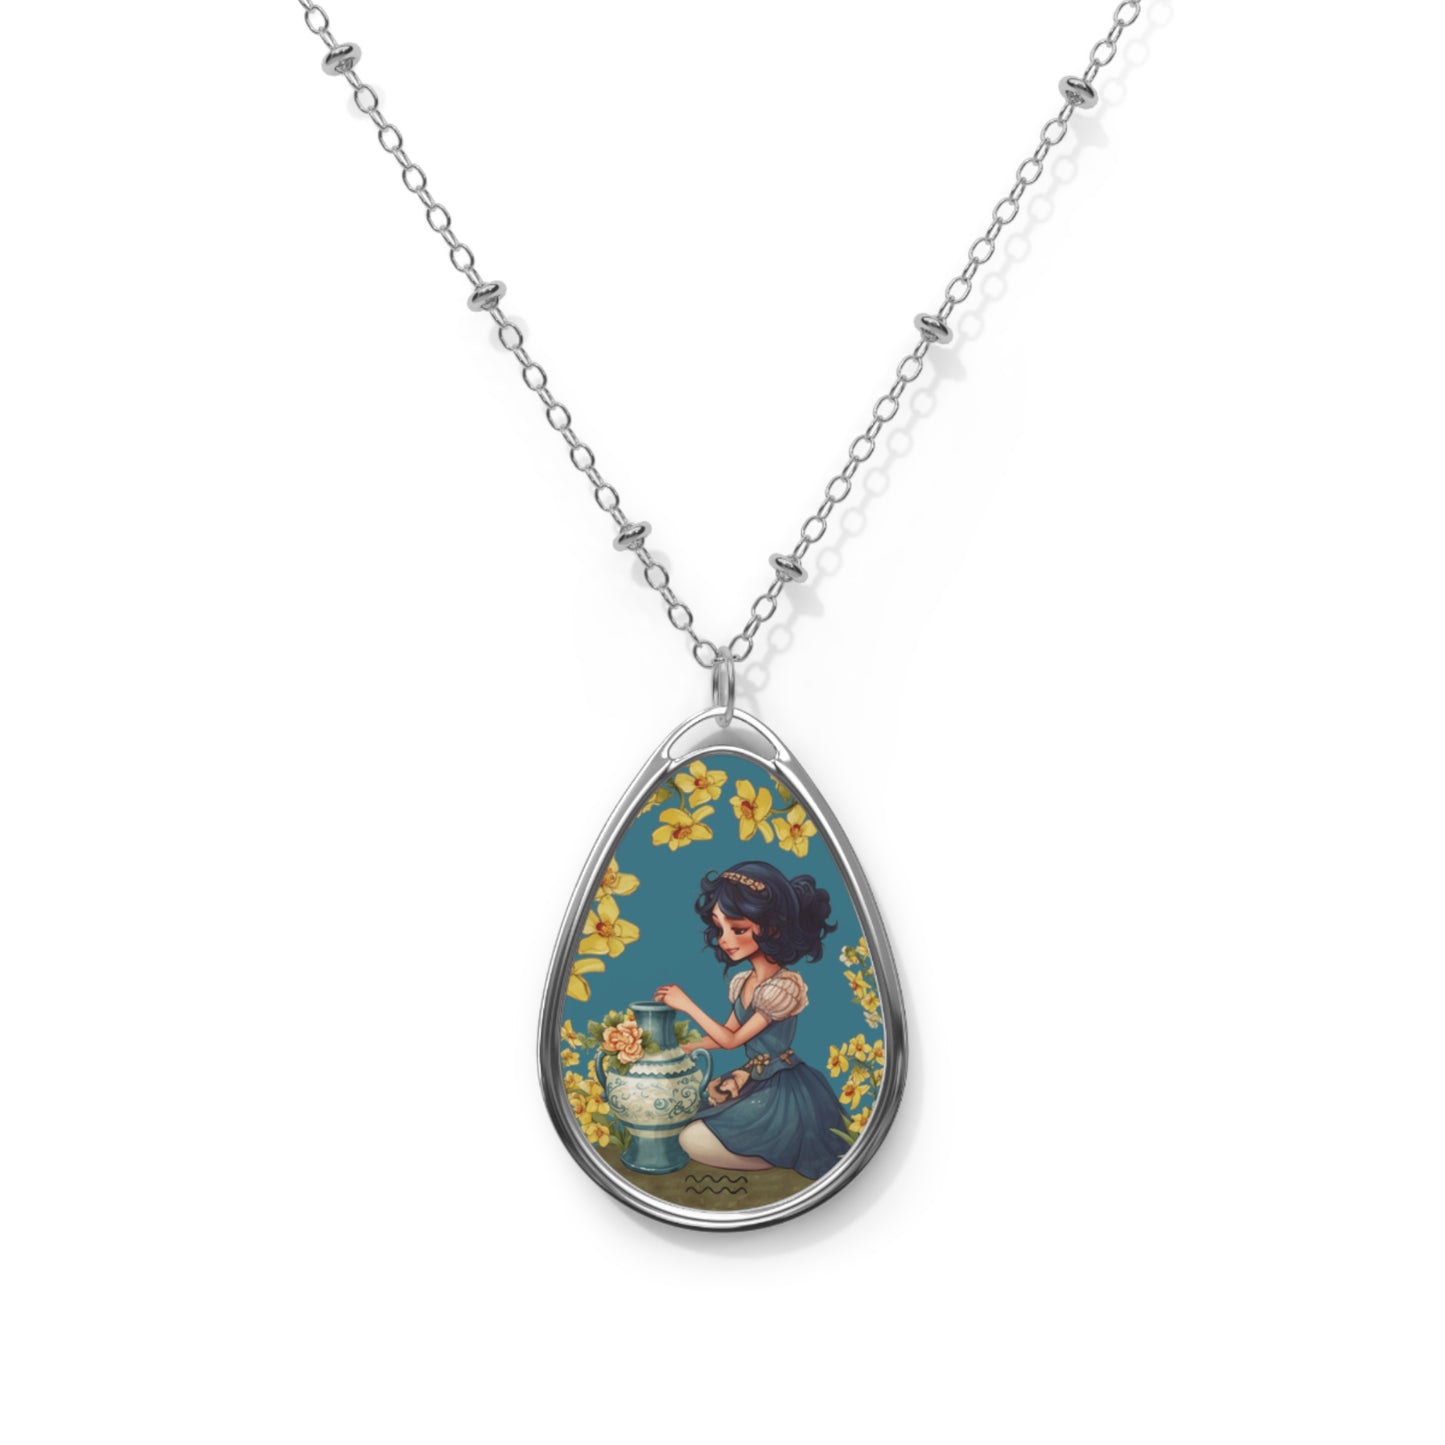 Aquarius Zodiac Sign ~ Cute Aquarius Girl Vintage Illustration ~ Necklace & Oval Pendant With Chain